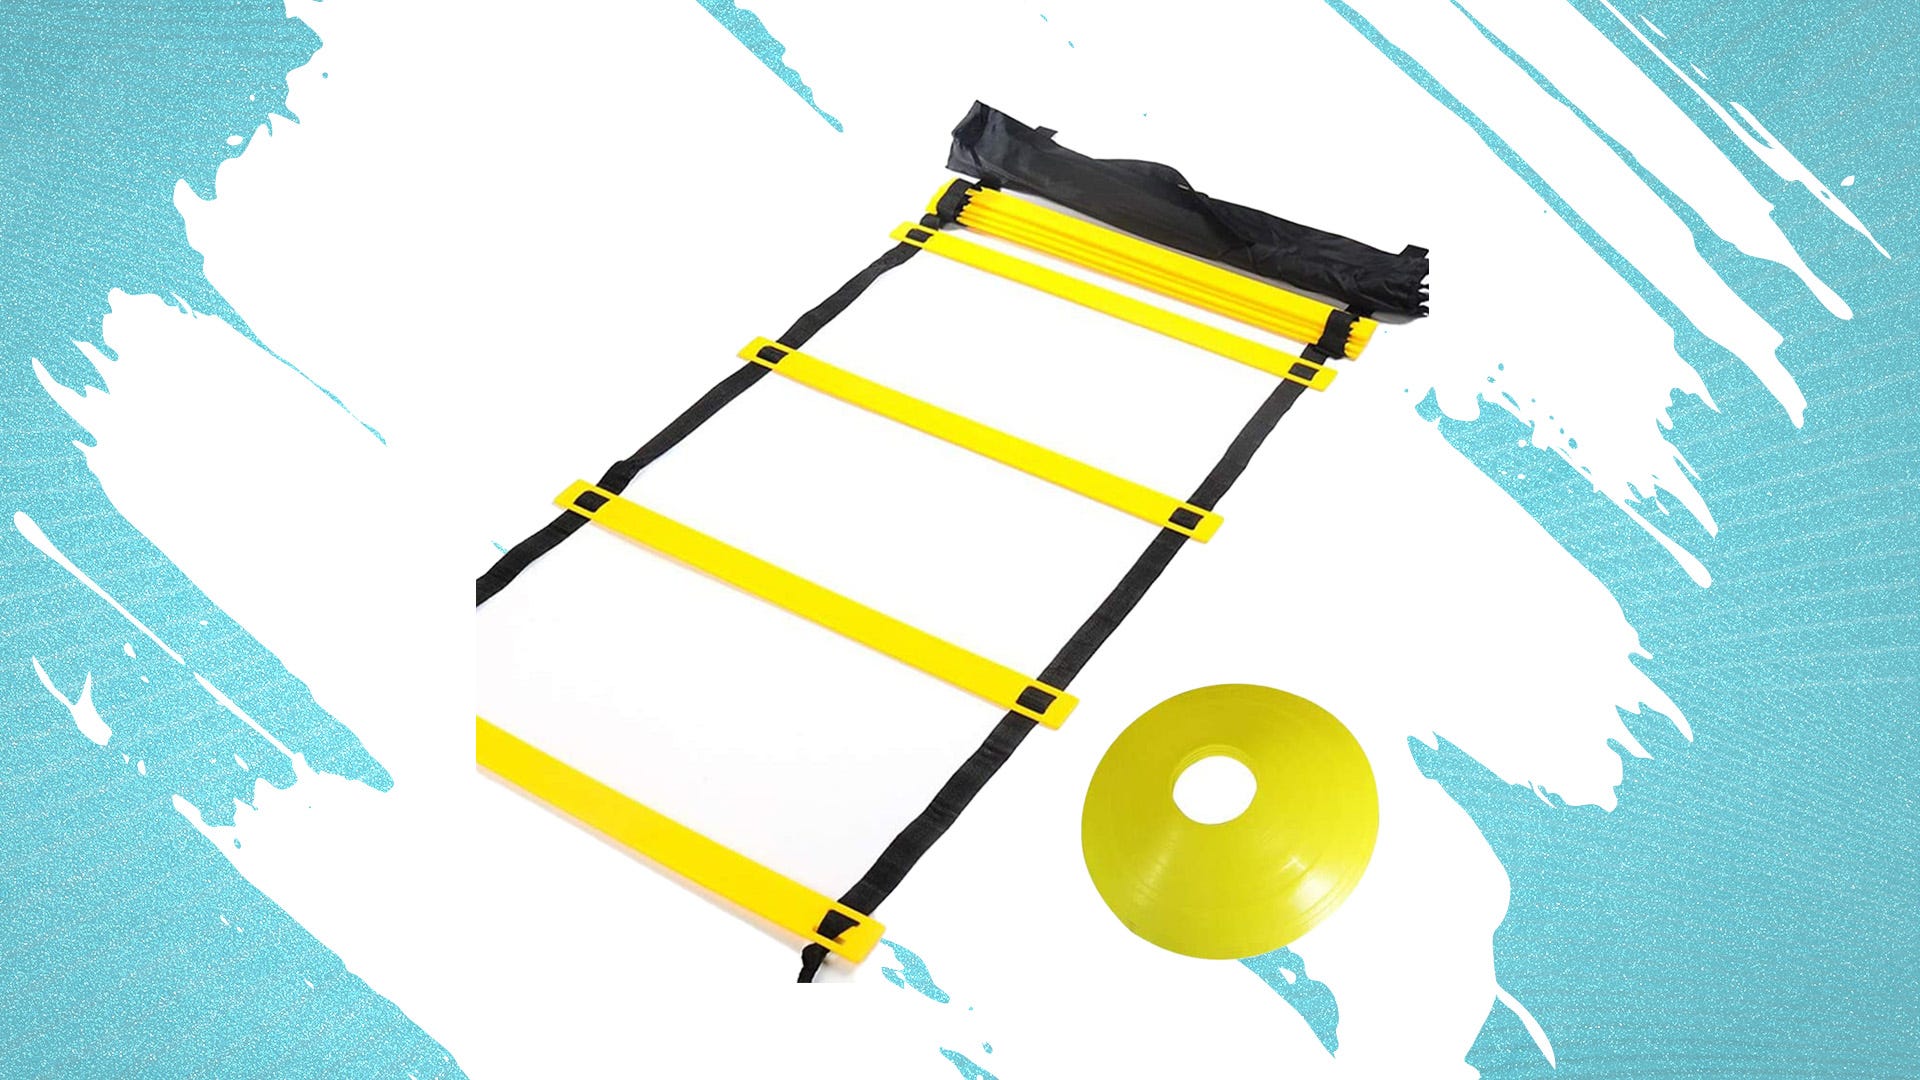 Agility ladder kit